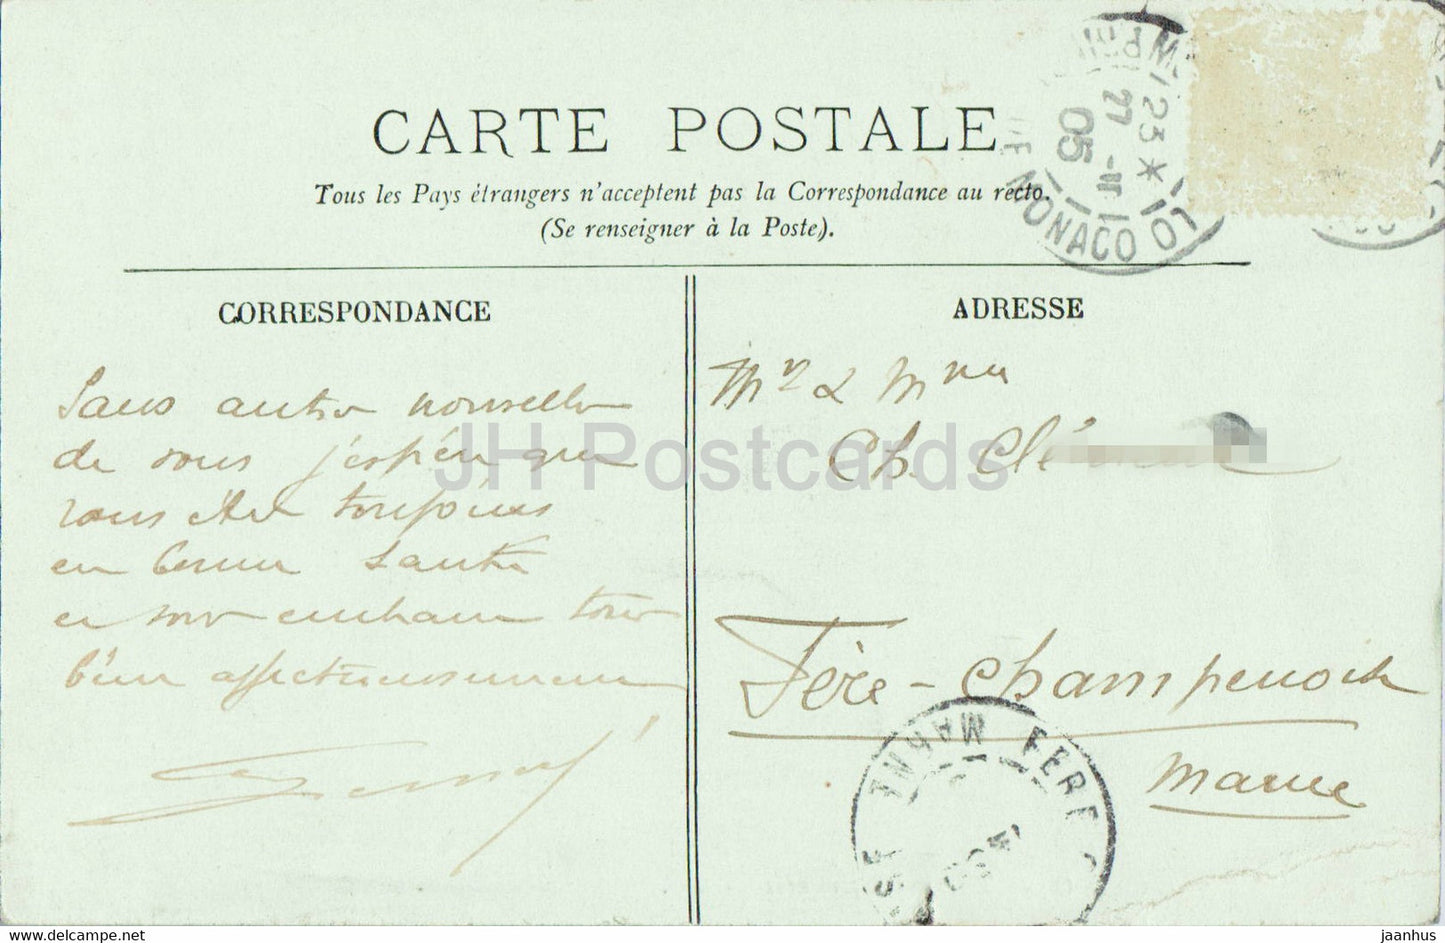 Monte Carlo - Terrasses Supérieures - 381 - carte postale ancienne - 1905 - Monaco - occasion